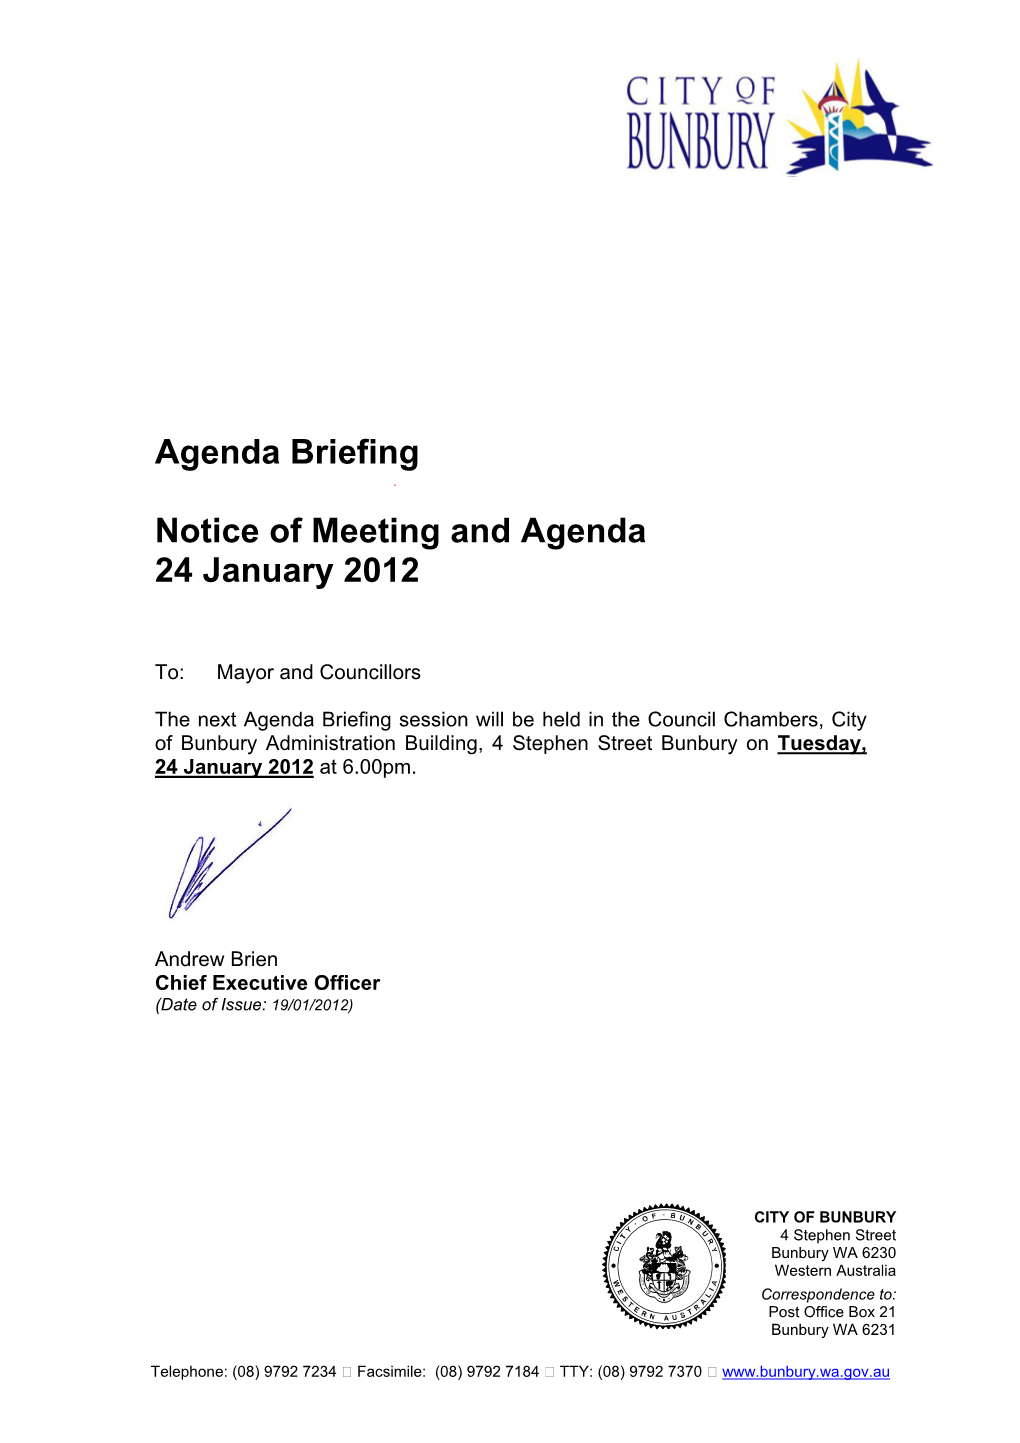 24 January 2012 Council Agenda Briefing Agenda